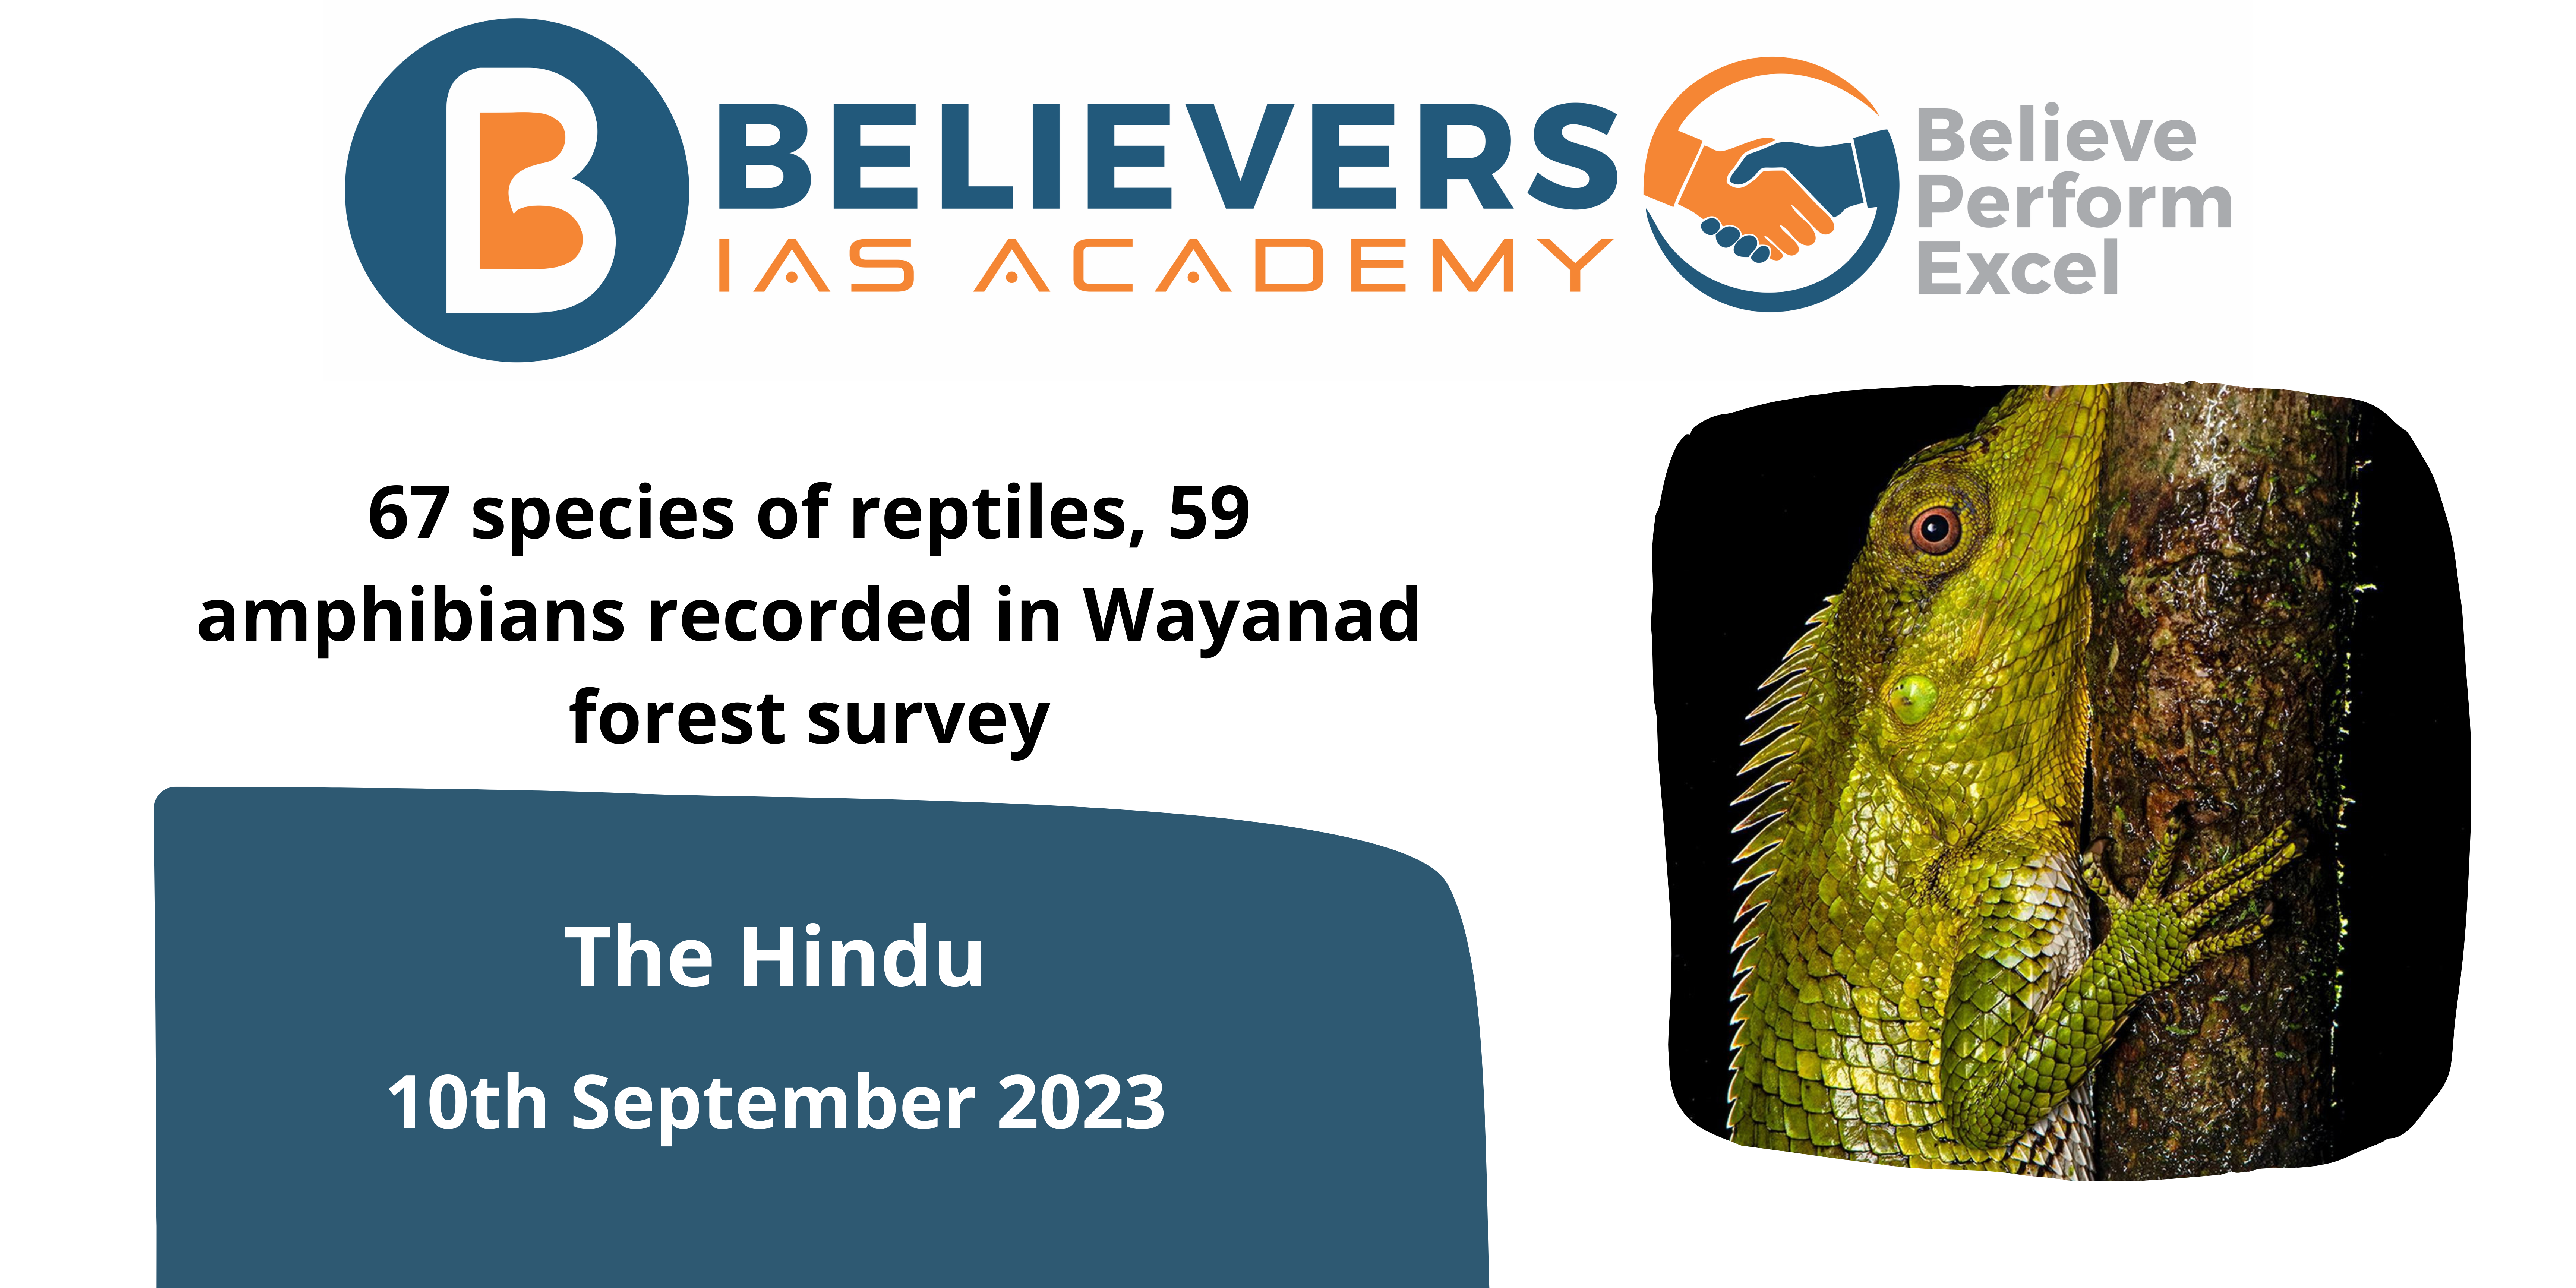 Wayanad Forest Survey: 67 Reptile & 59 Amphibian Species - Believers IAS